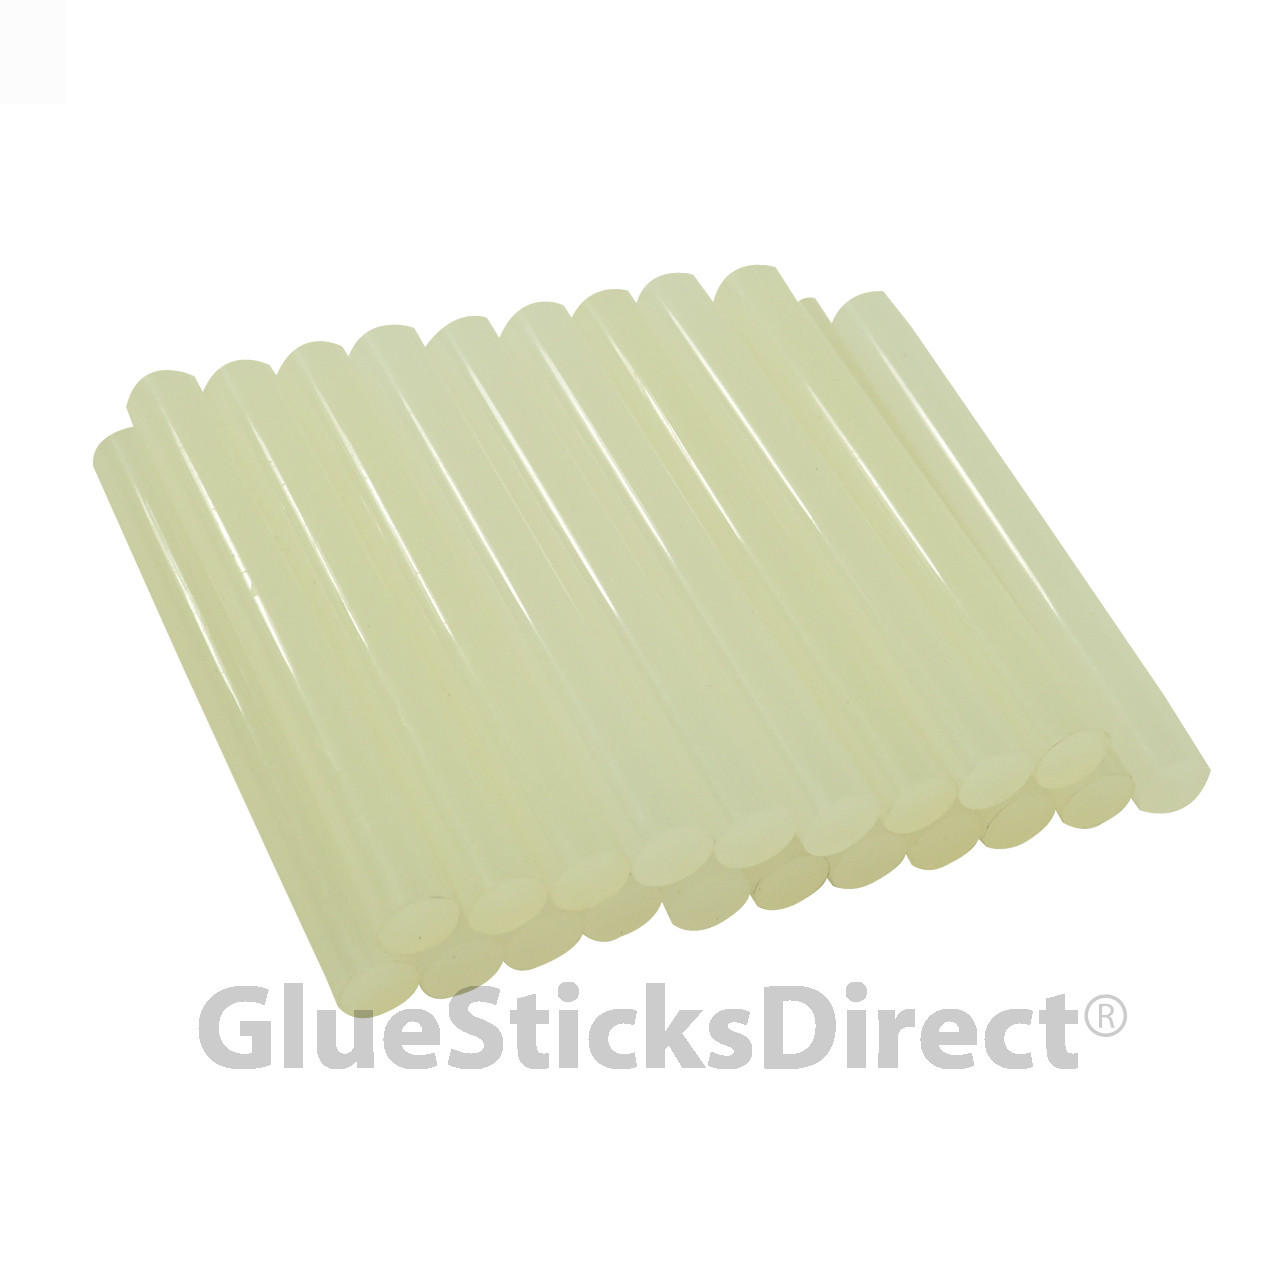 GlueSticksDirect Wholesale® Hot Melt Glue Sticks 7/16 X 4 25 lbs Bulk -  GlueSticksDirect